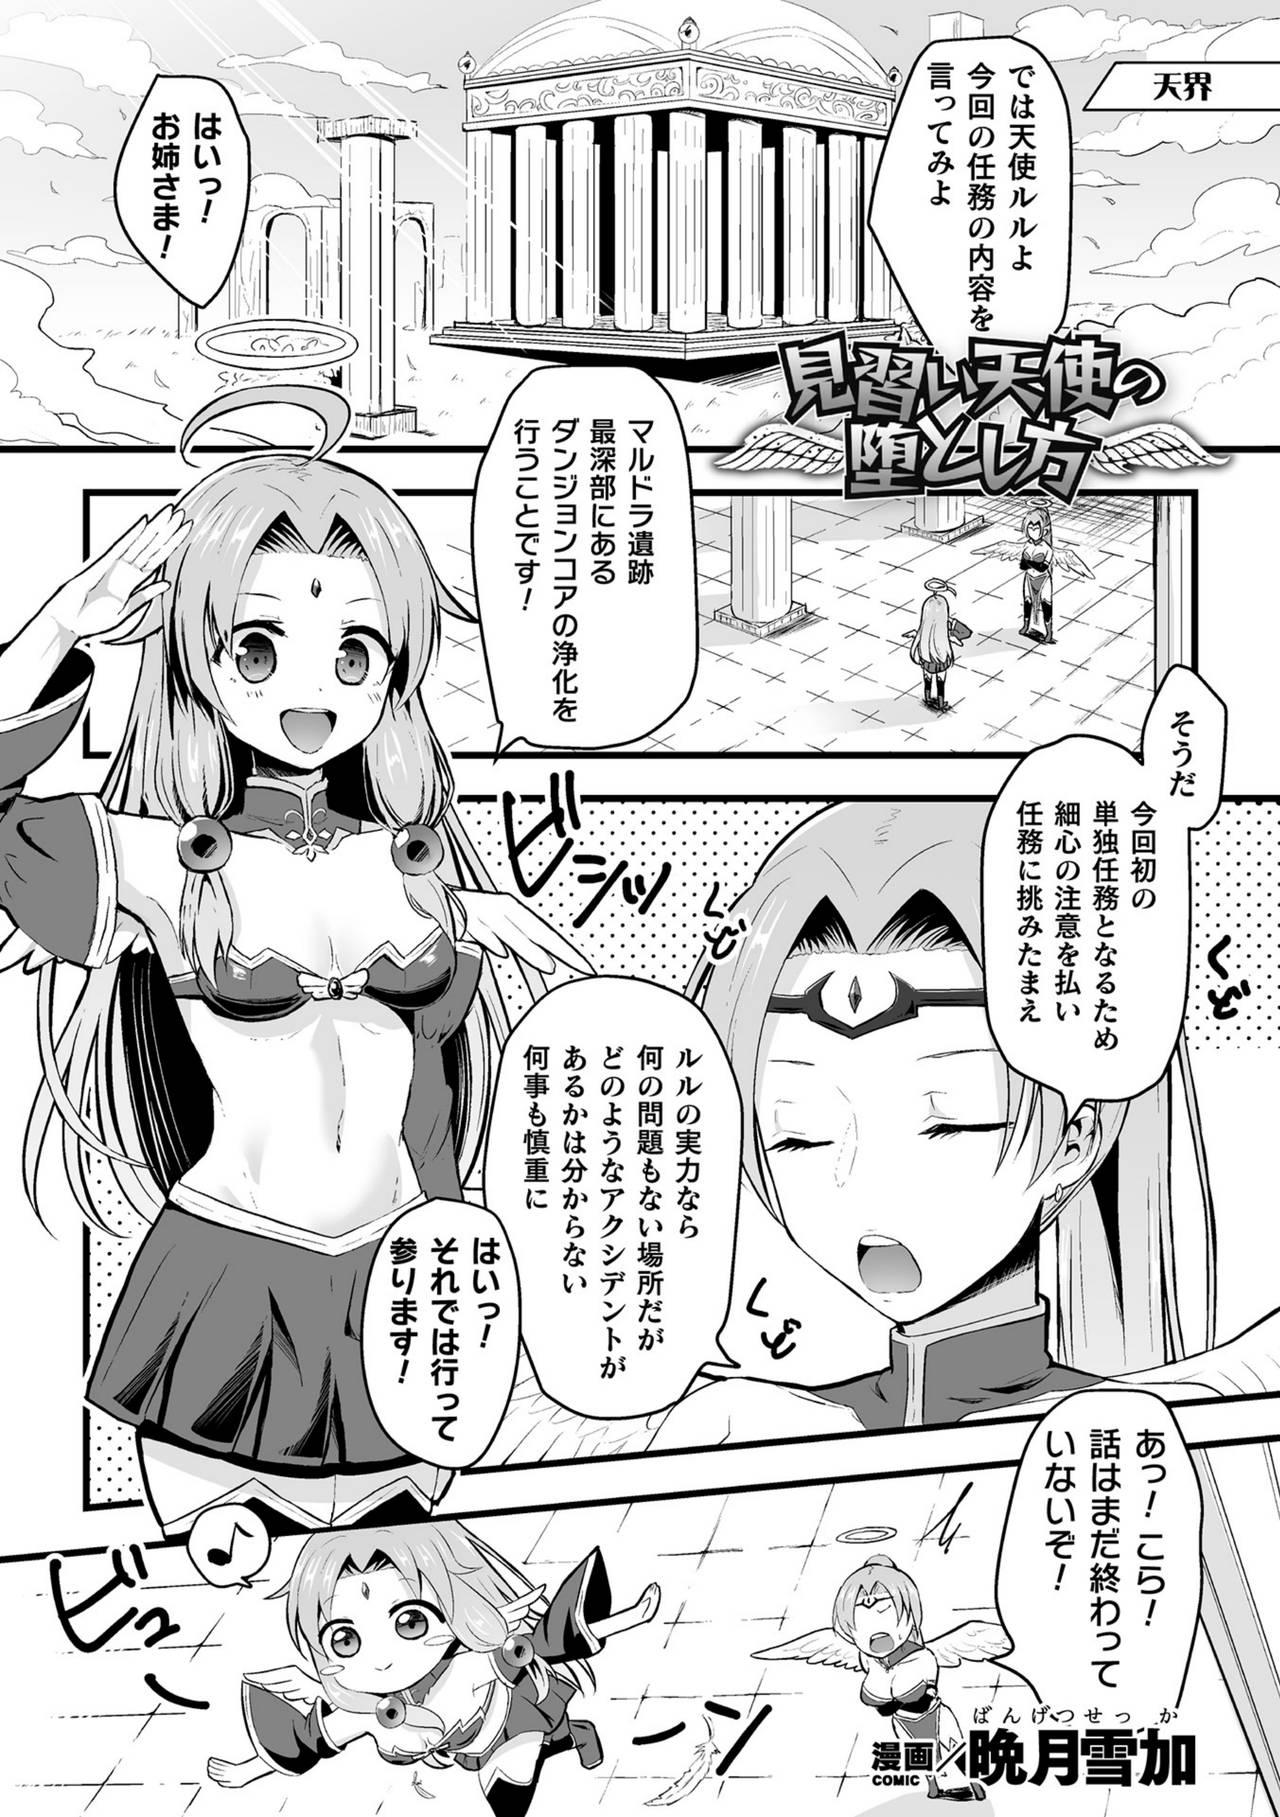 2D Comic Magazine Zecchou Kairaku ga Tomaranai Ero-Trap Dungeon Vol. 3 20